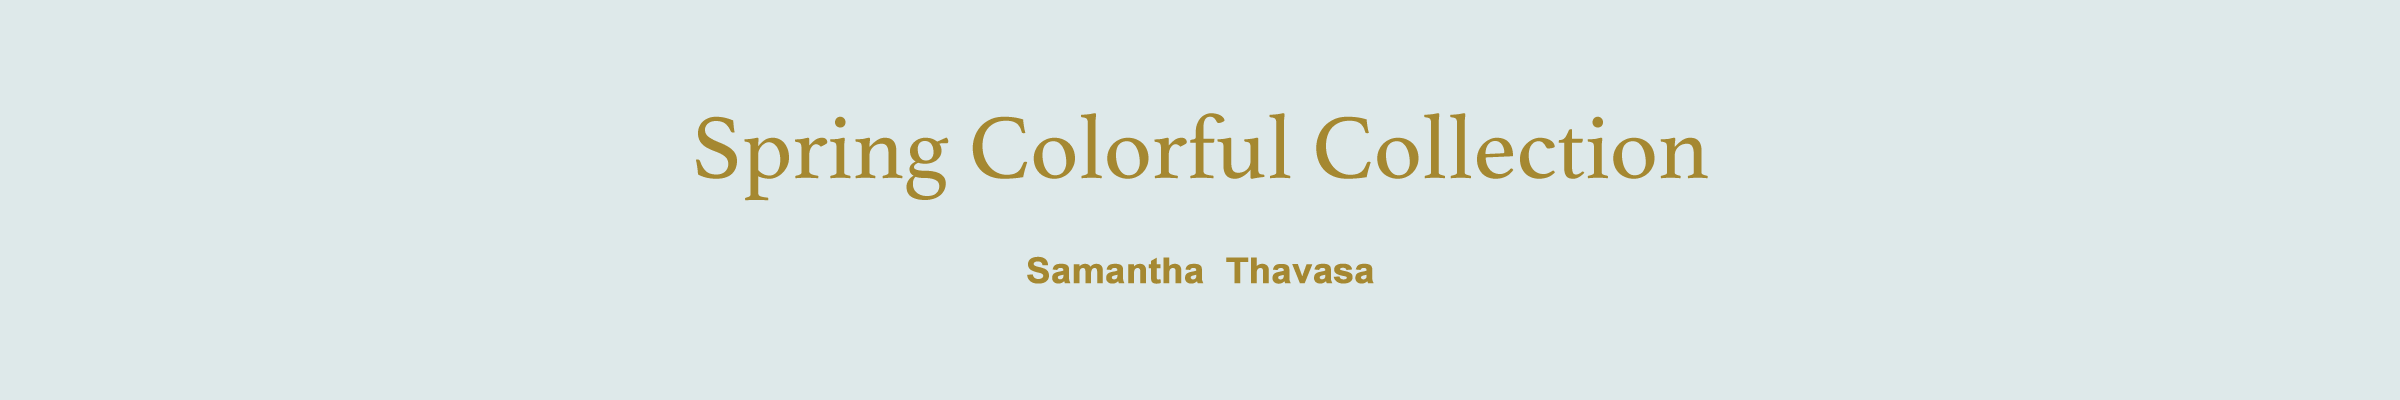 Spring Colorful Collection │ Samantha Thavasa